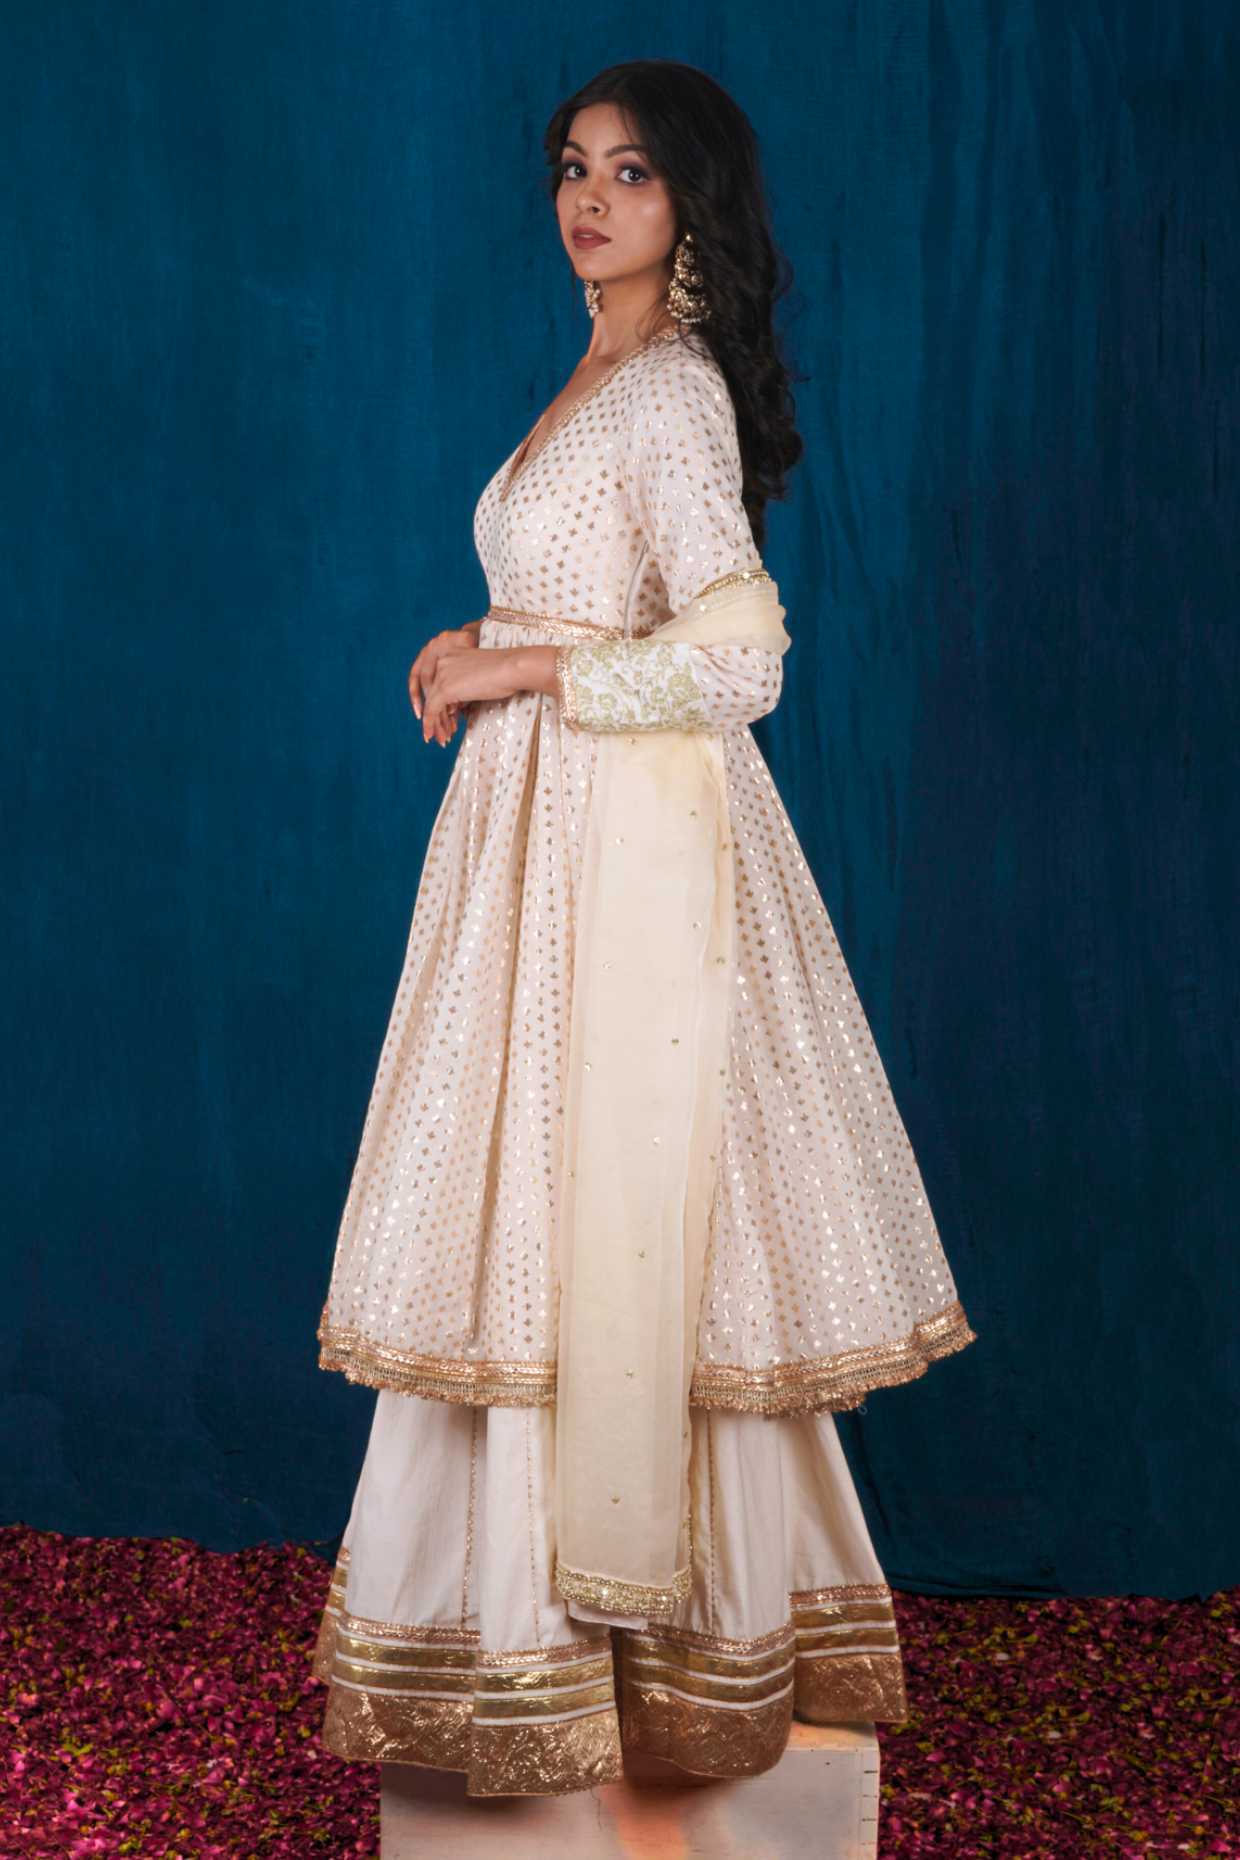 Off-White and Gold Banarasi Chanderi Anarkali Set with Skirt